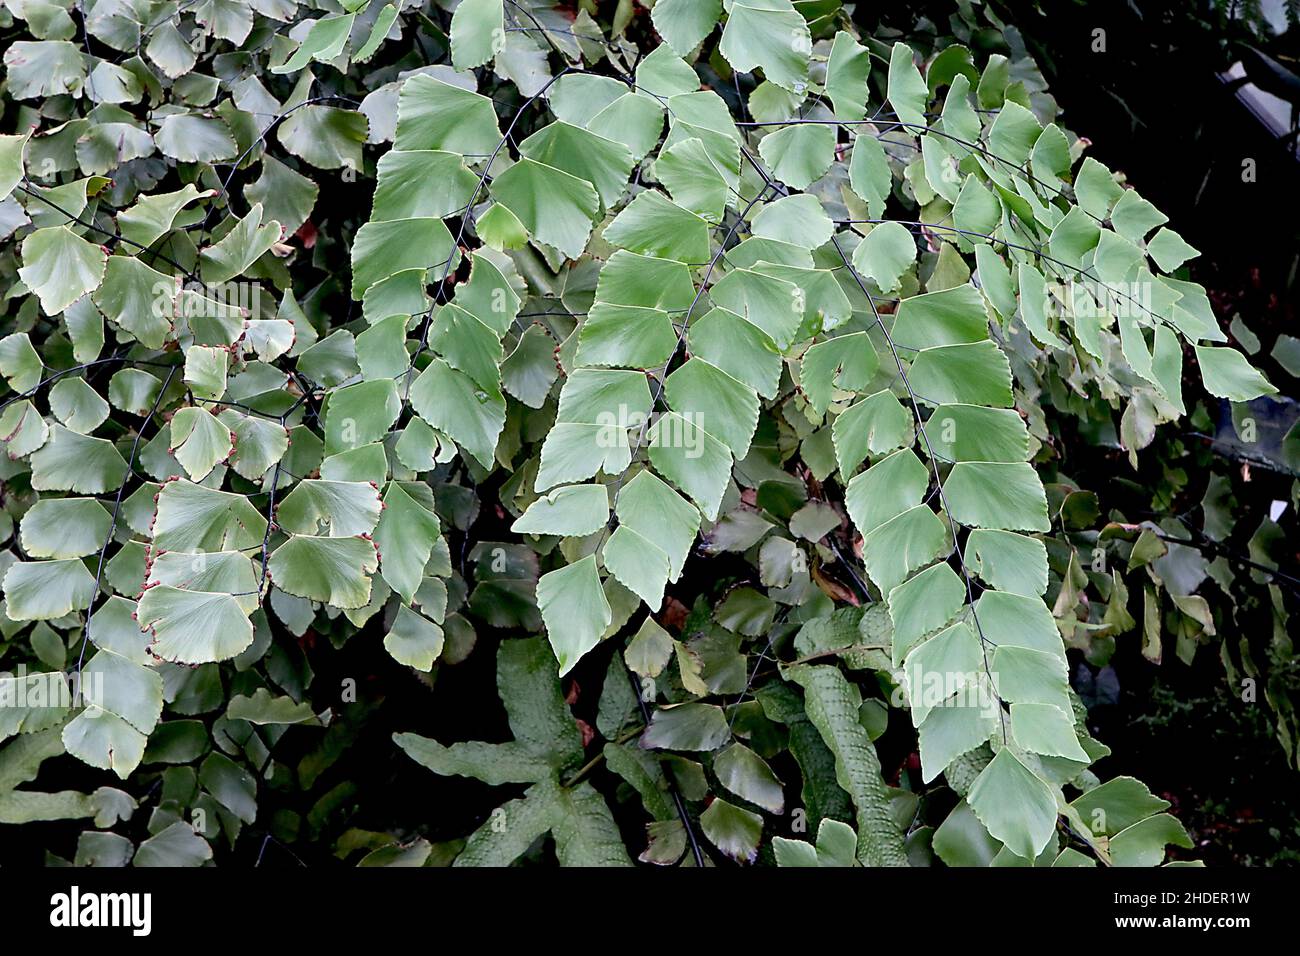 Adiantum trapeziforme diamond maidenhair fern – glaucous and mid green diamond-shaped tripinnate leaves,  January, England, UK Stock Photo